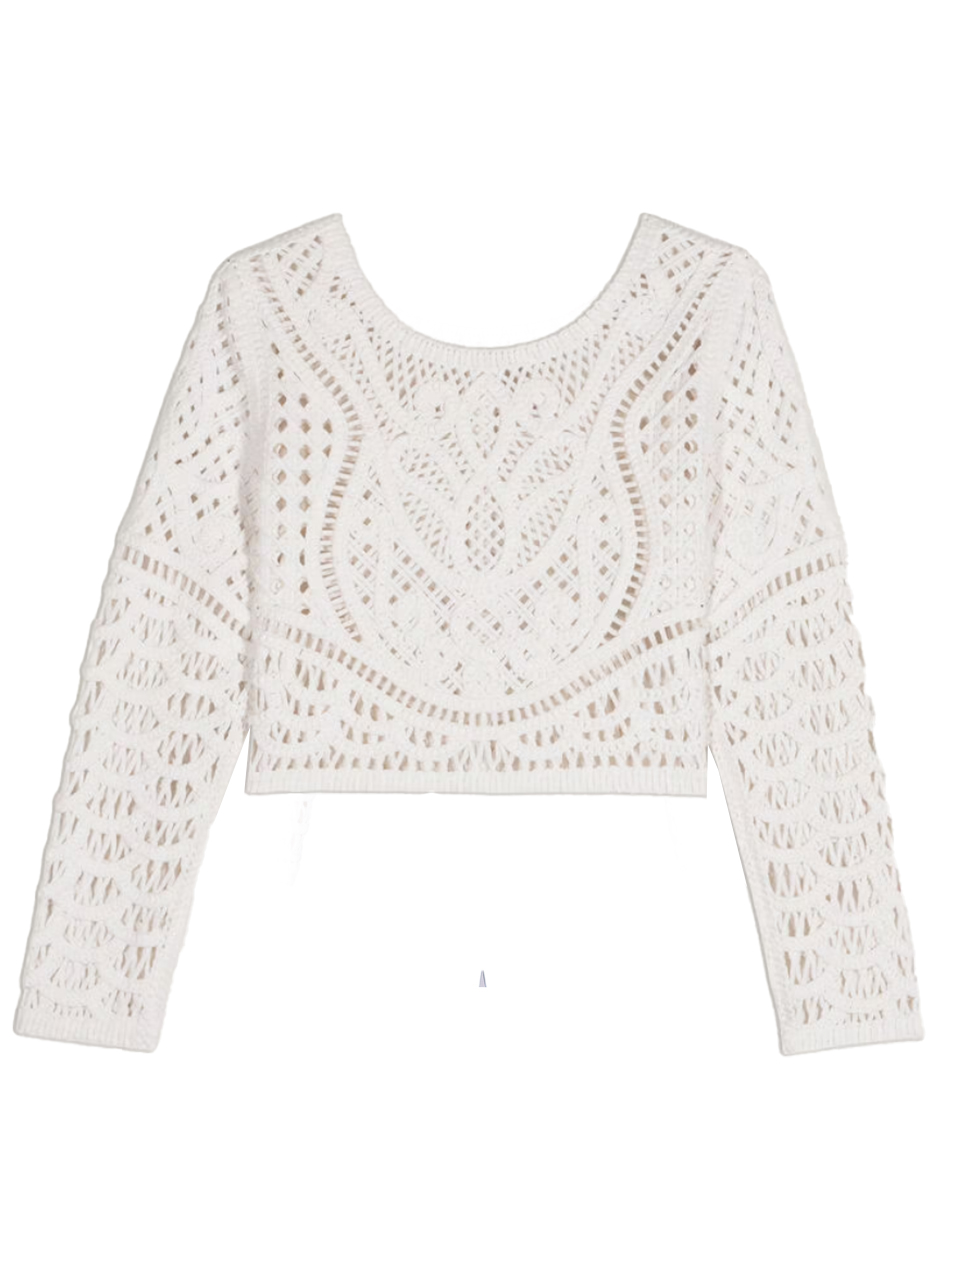 BA&SH Marc Long Sleeve Cardigan Sweater in White Product Shot 